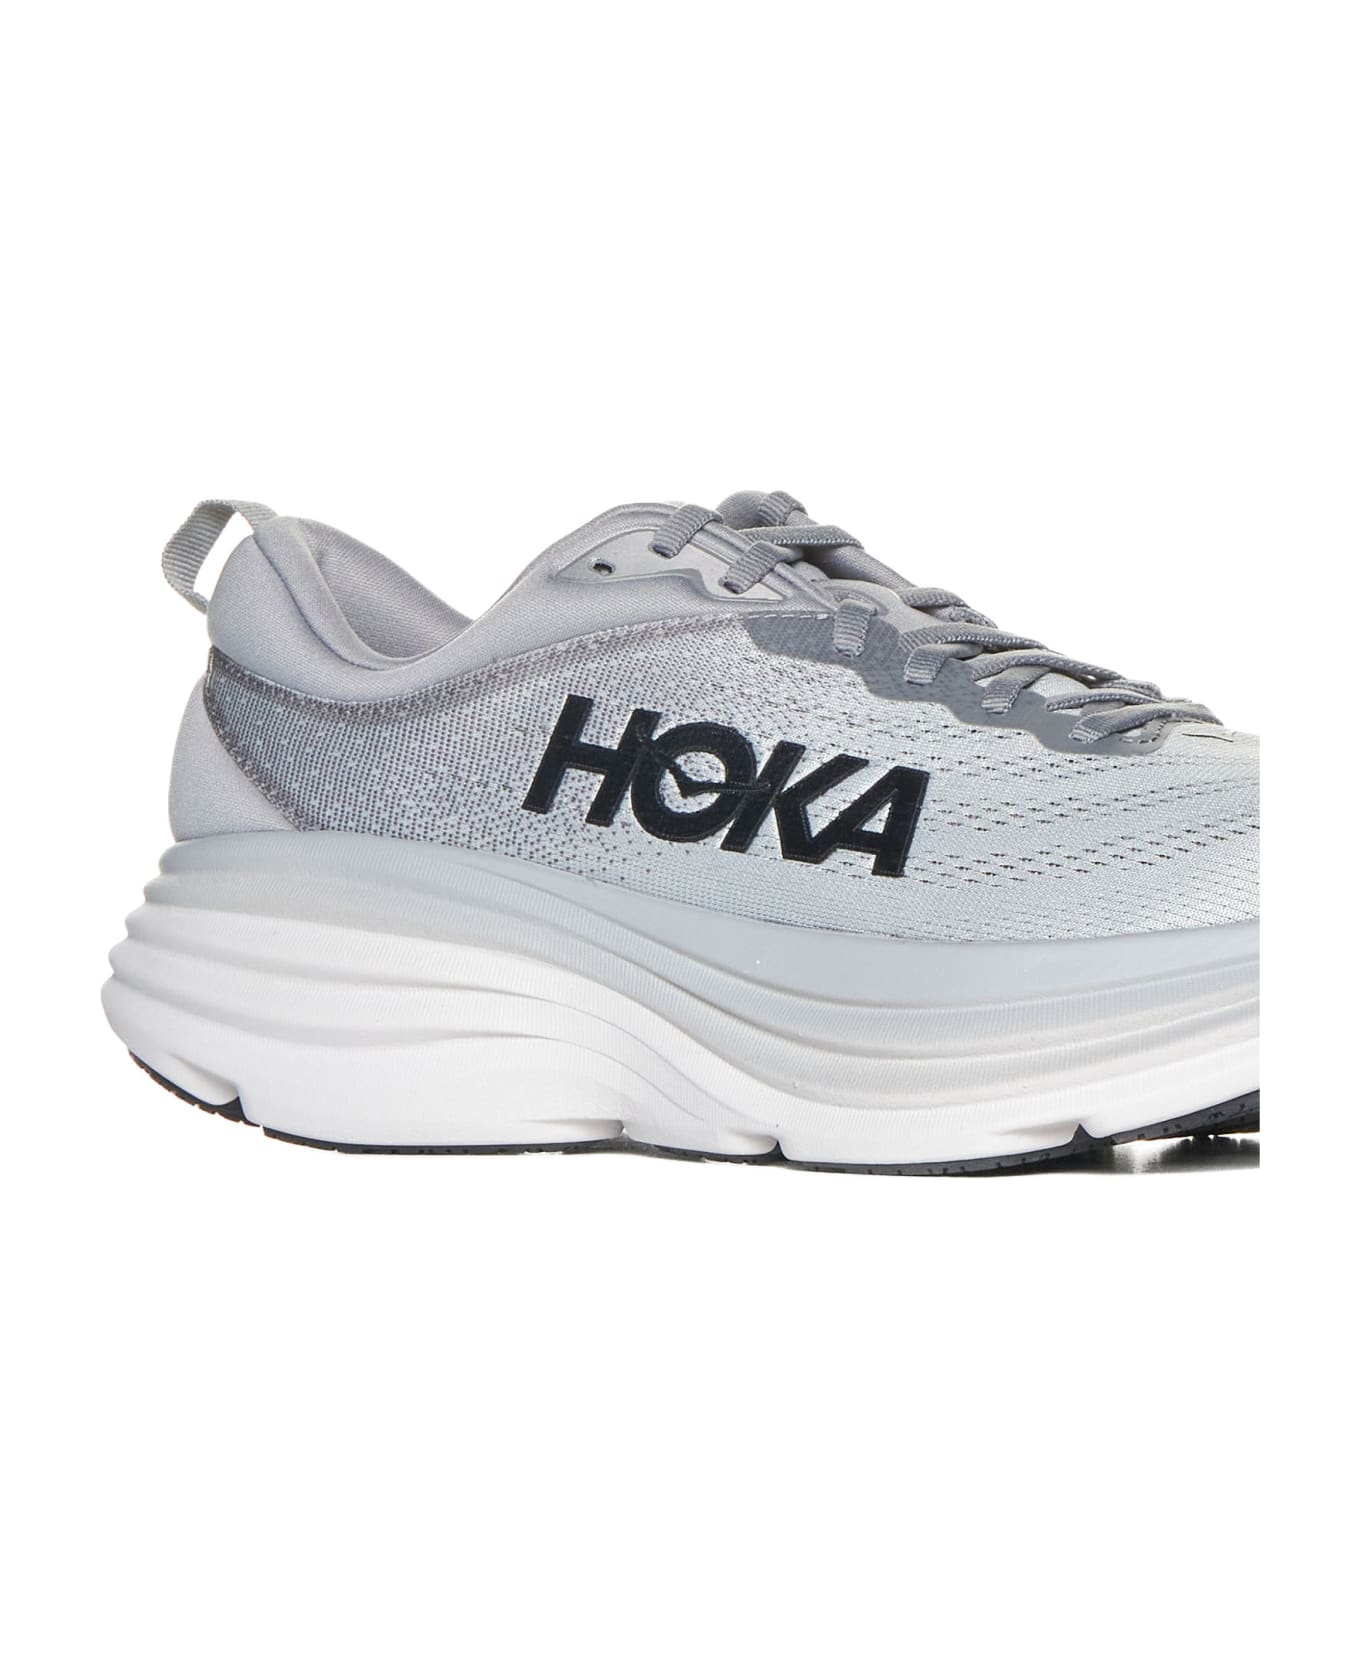 Hoka Sneakers - Sharkskin / harbor mist